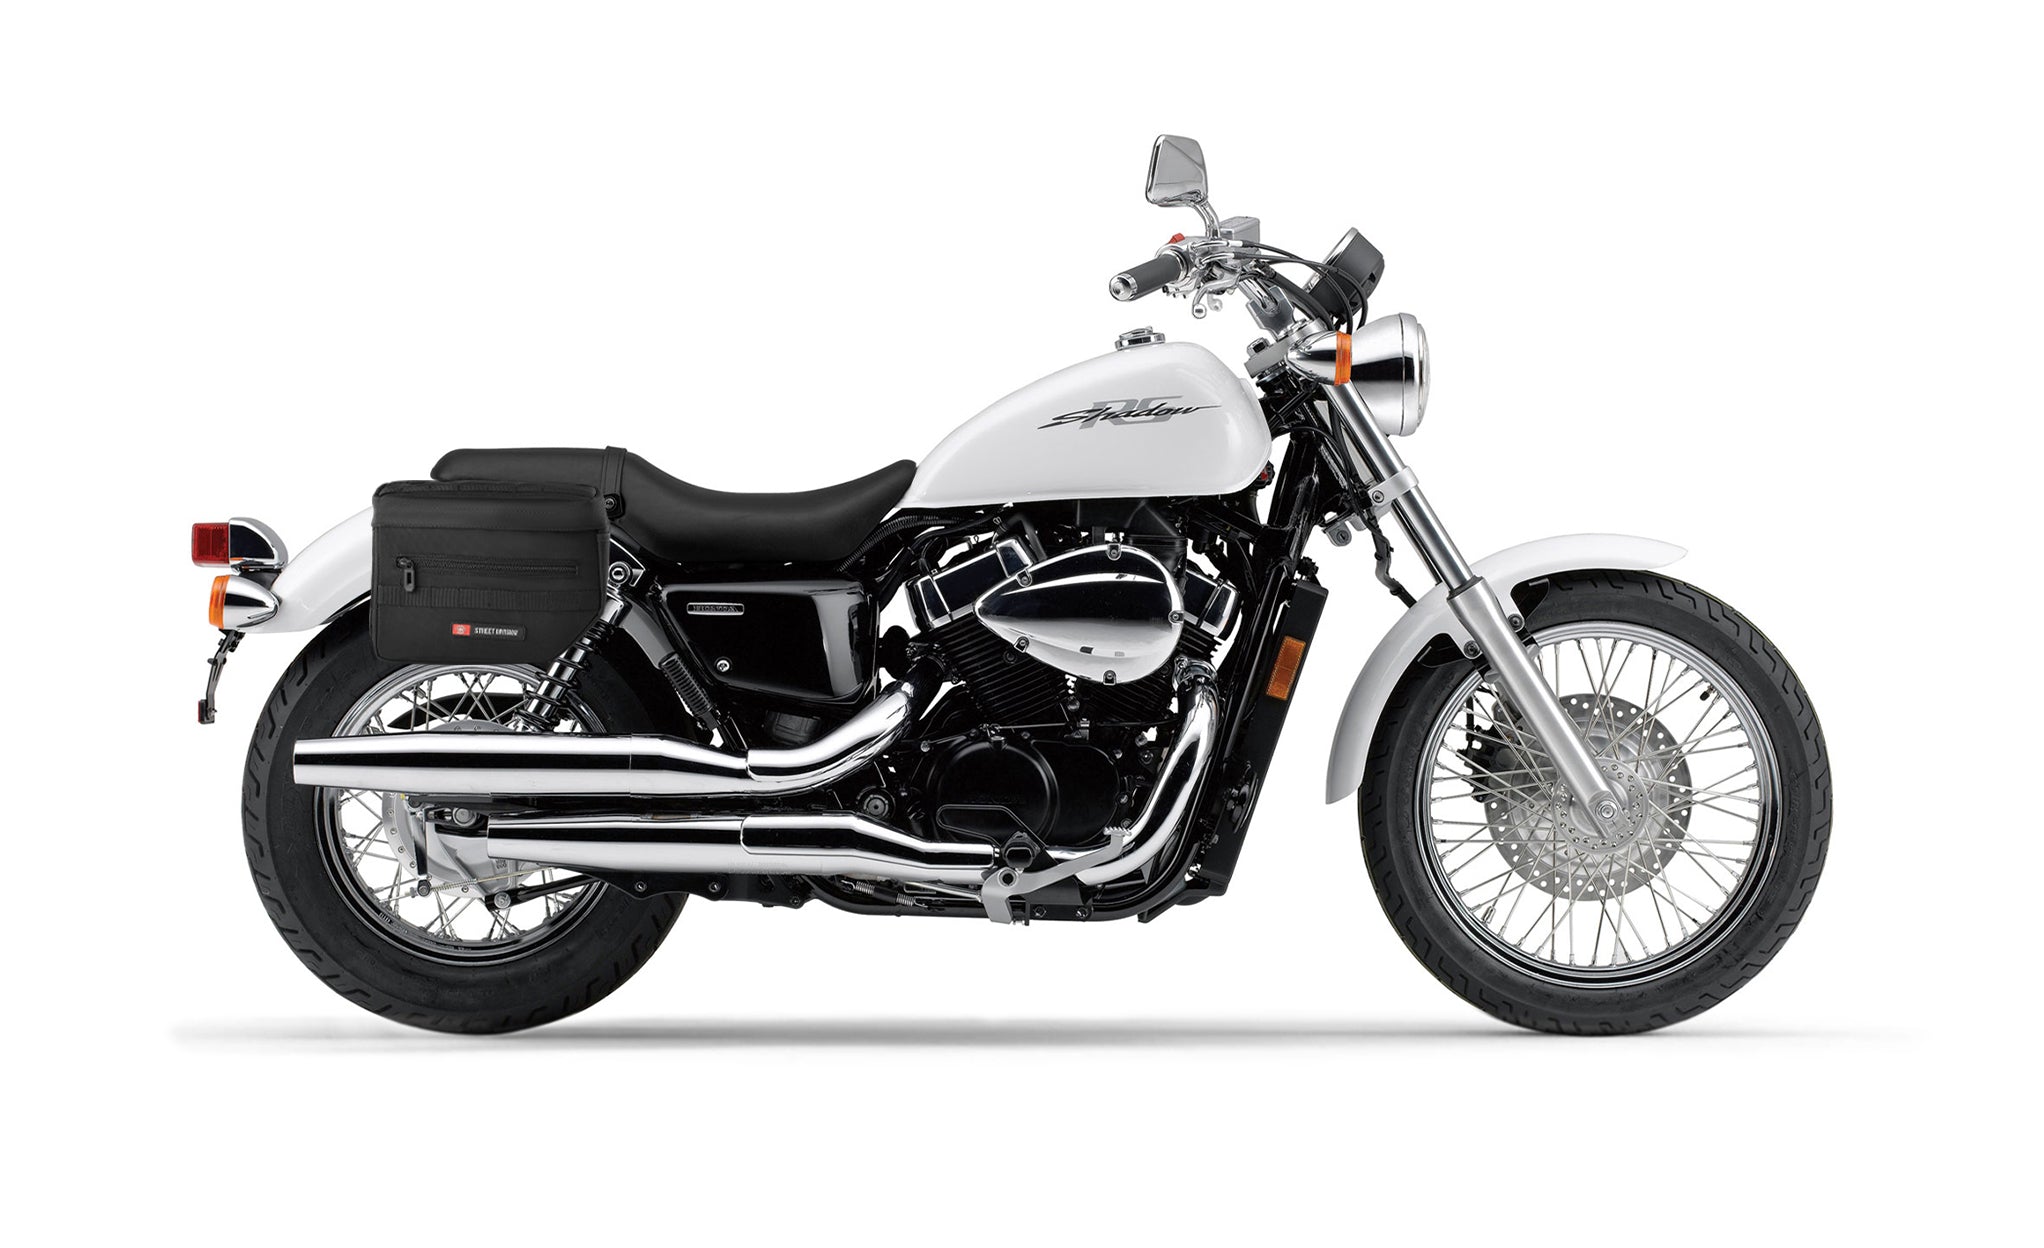 Viking Patriot Small Honda Shadow 750 Rs Motorcycle Throw Over Saddlebags on Bike Photo @expand